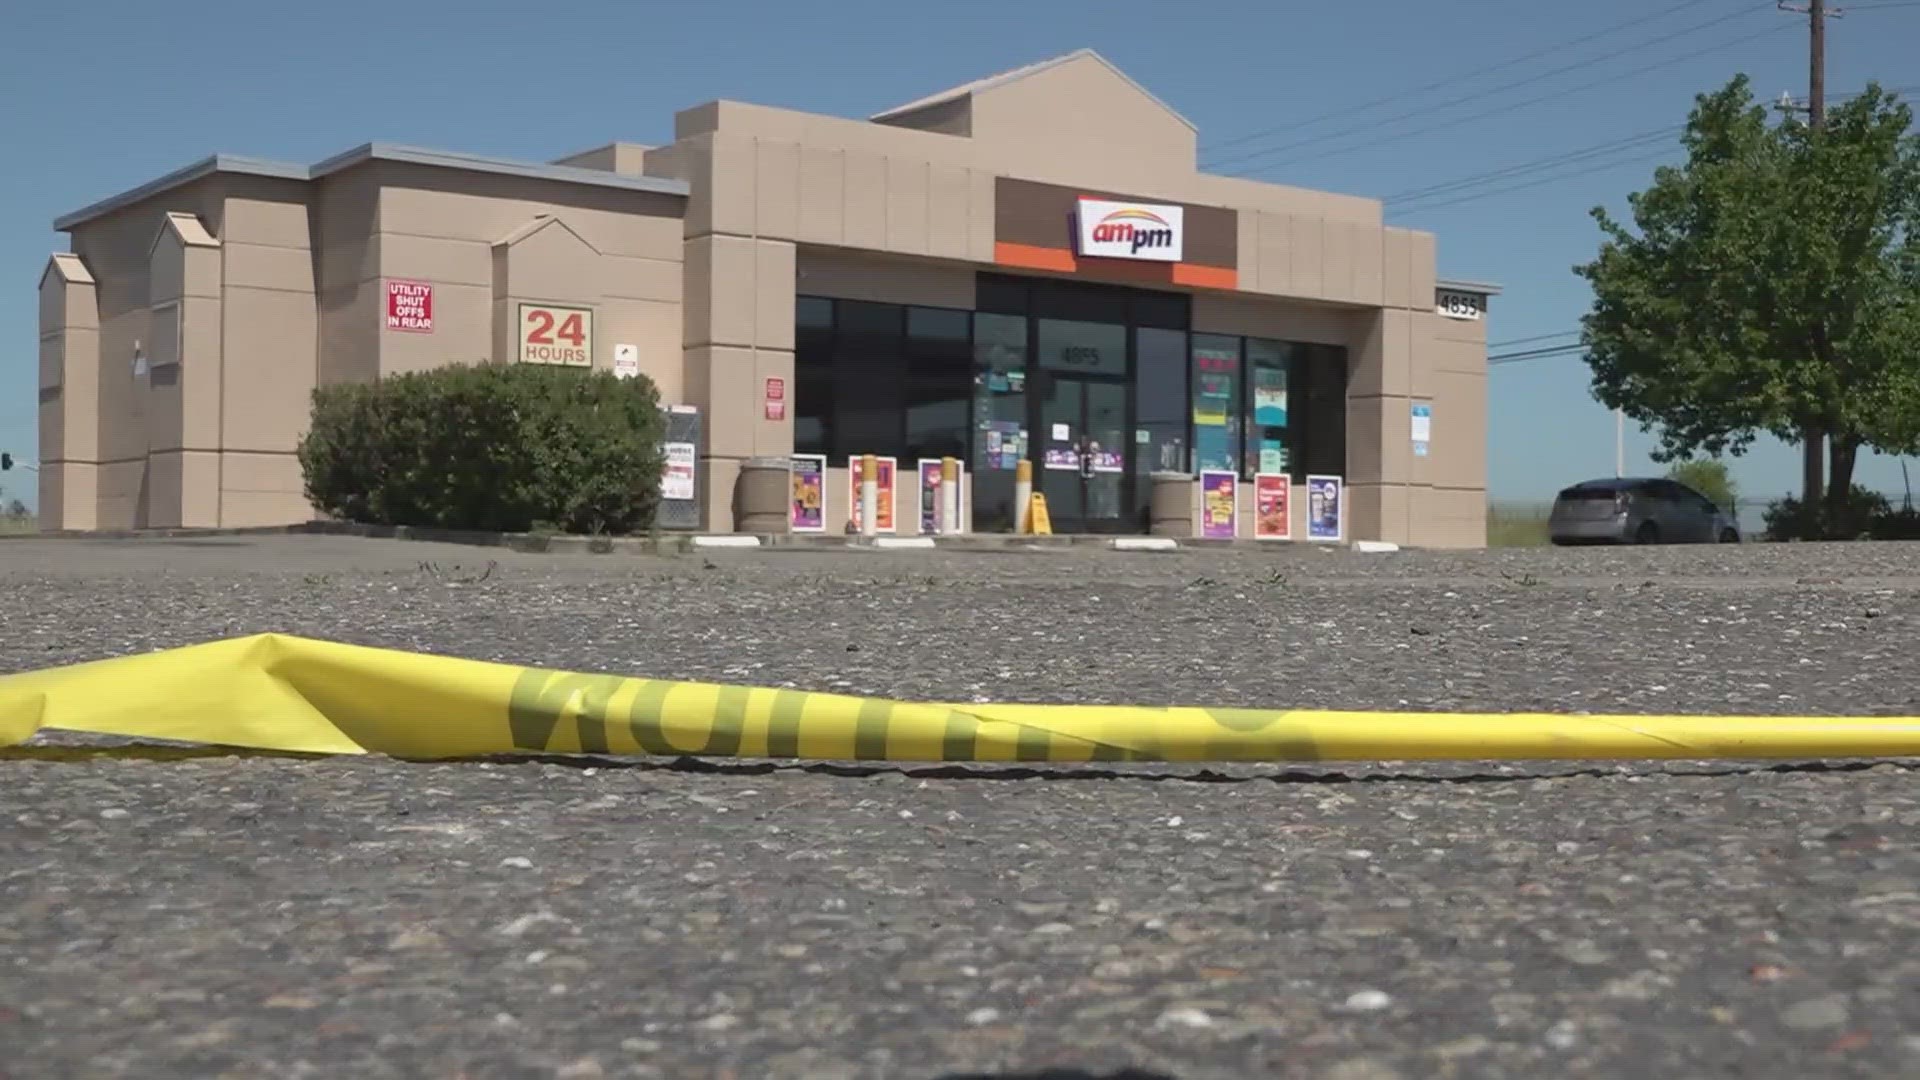 Stockton cashier killed in shooting identified